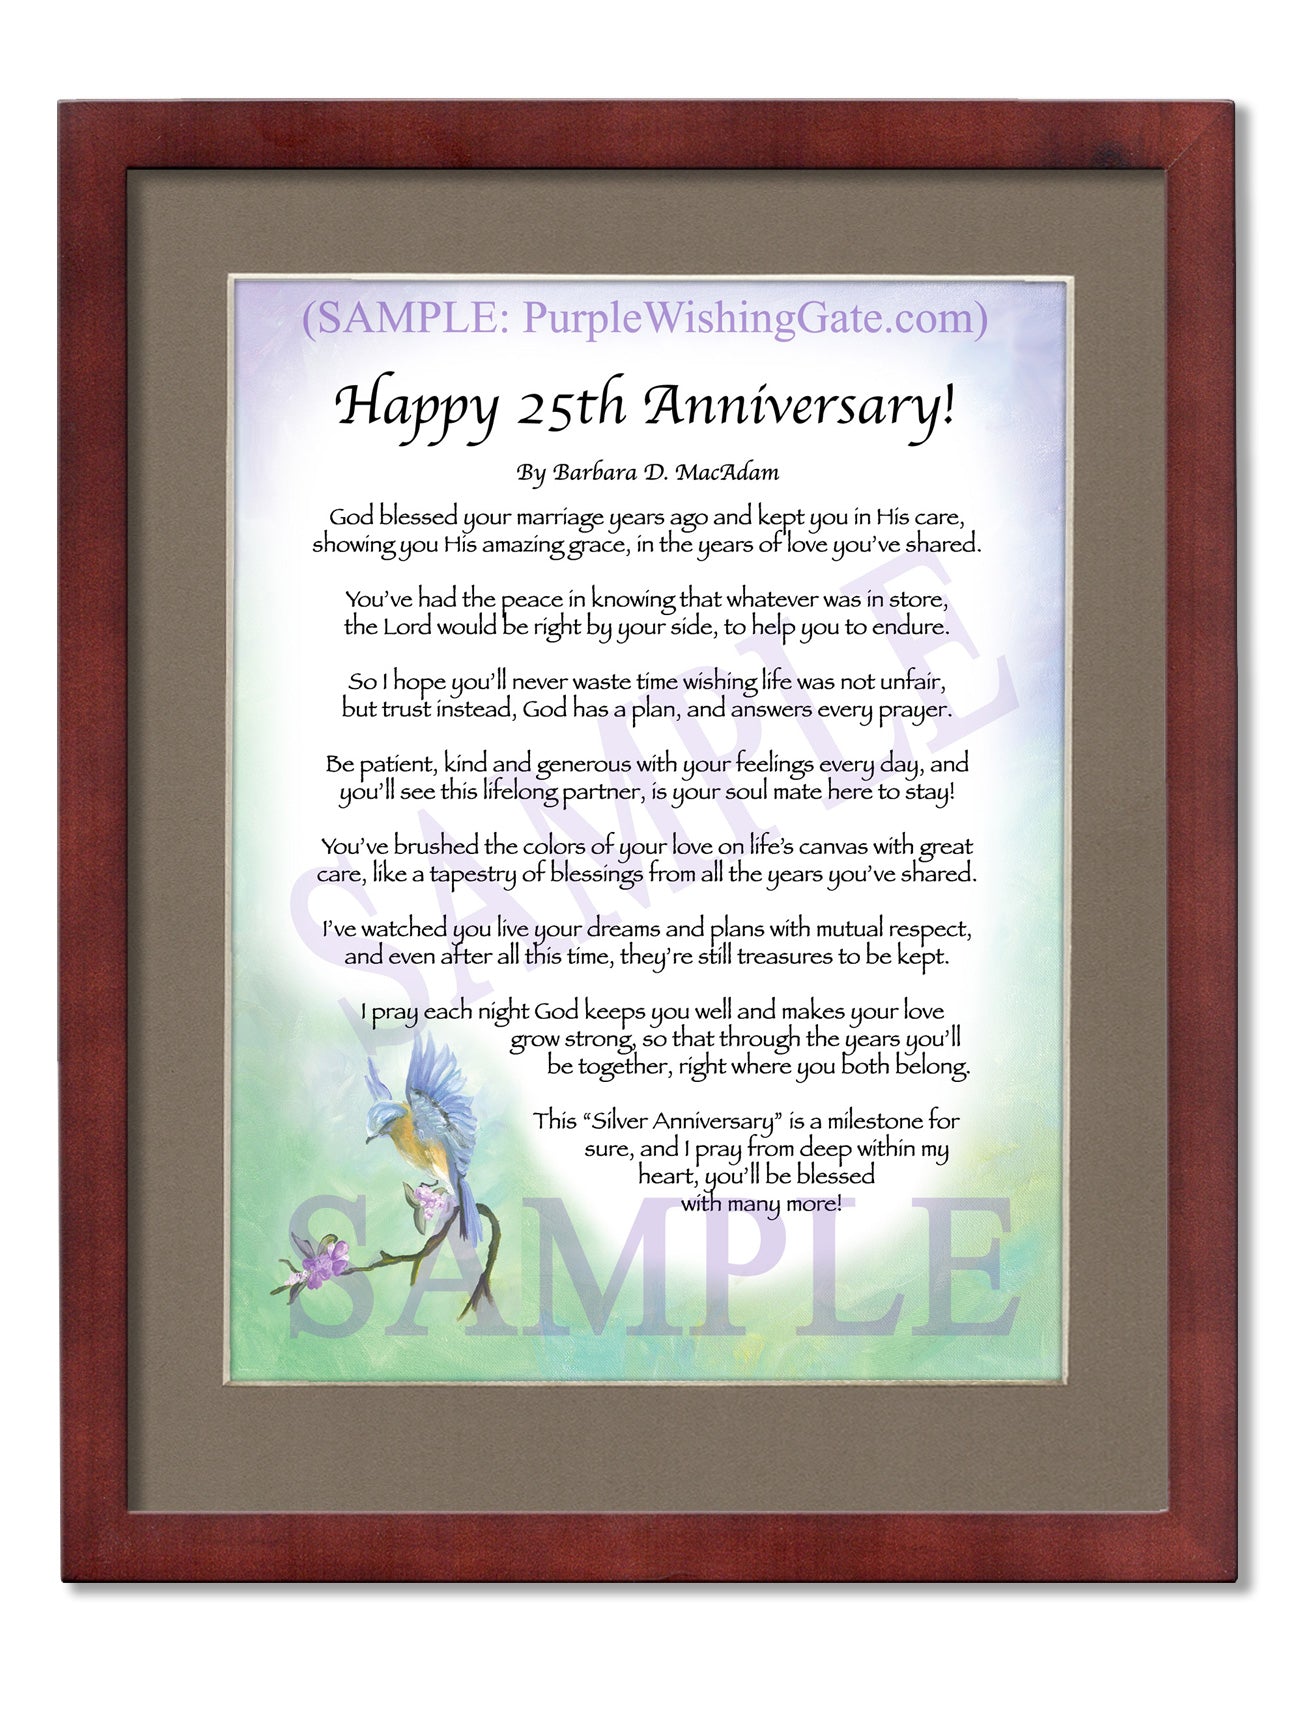 Happy 25th Anniversary: Personalized Poem Gift | PurpleWishingGate.com